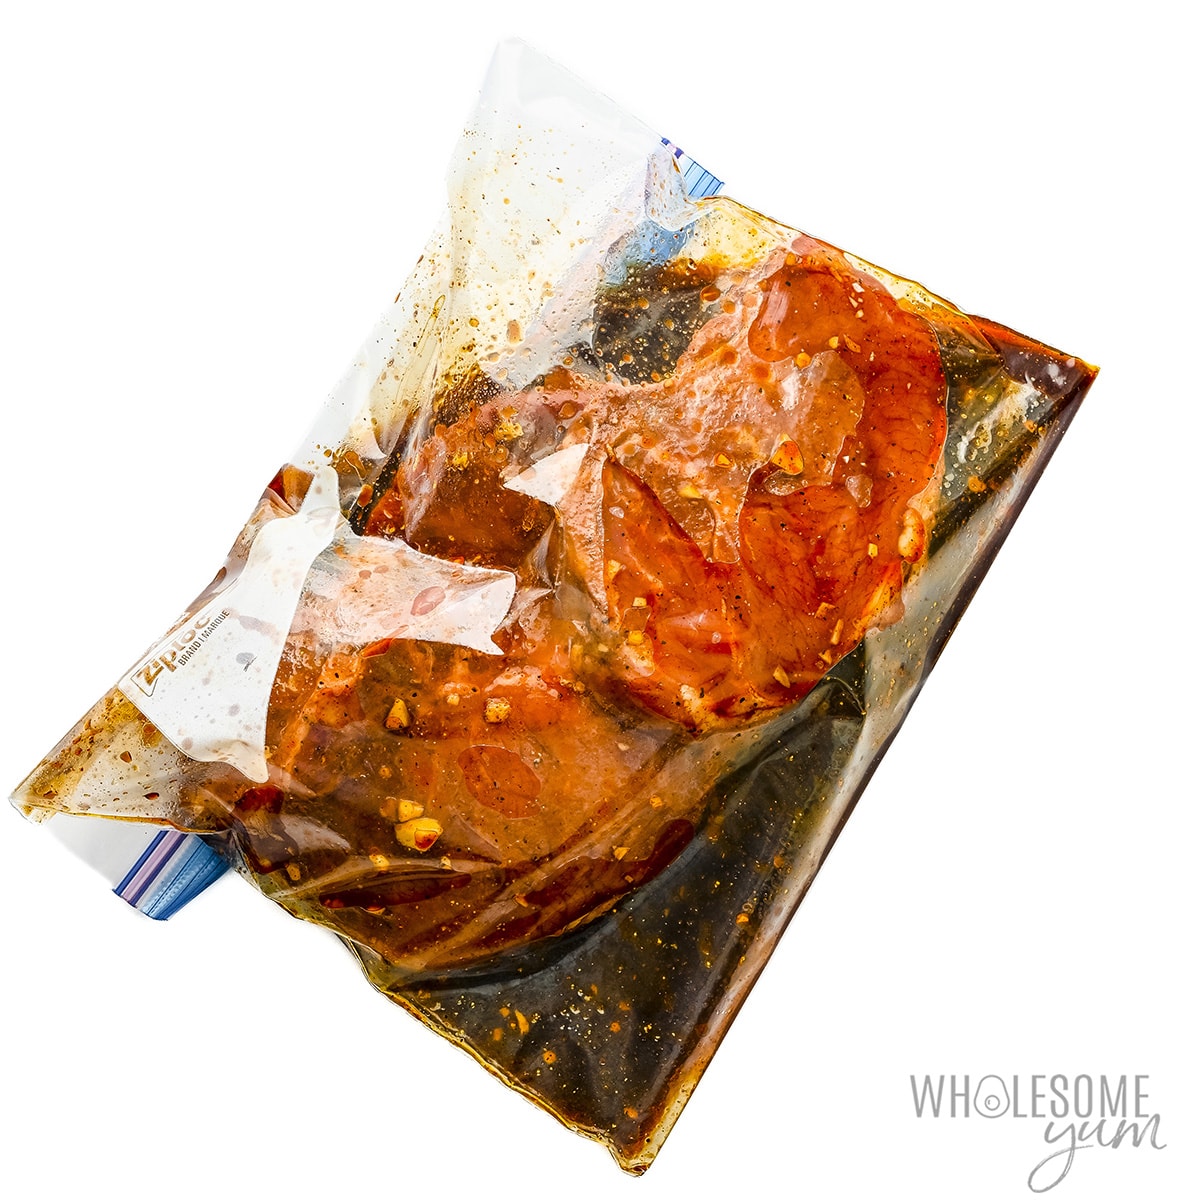 Meat marinating in a zip lock bag.